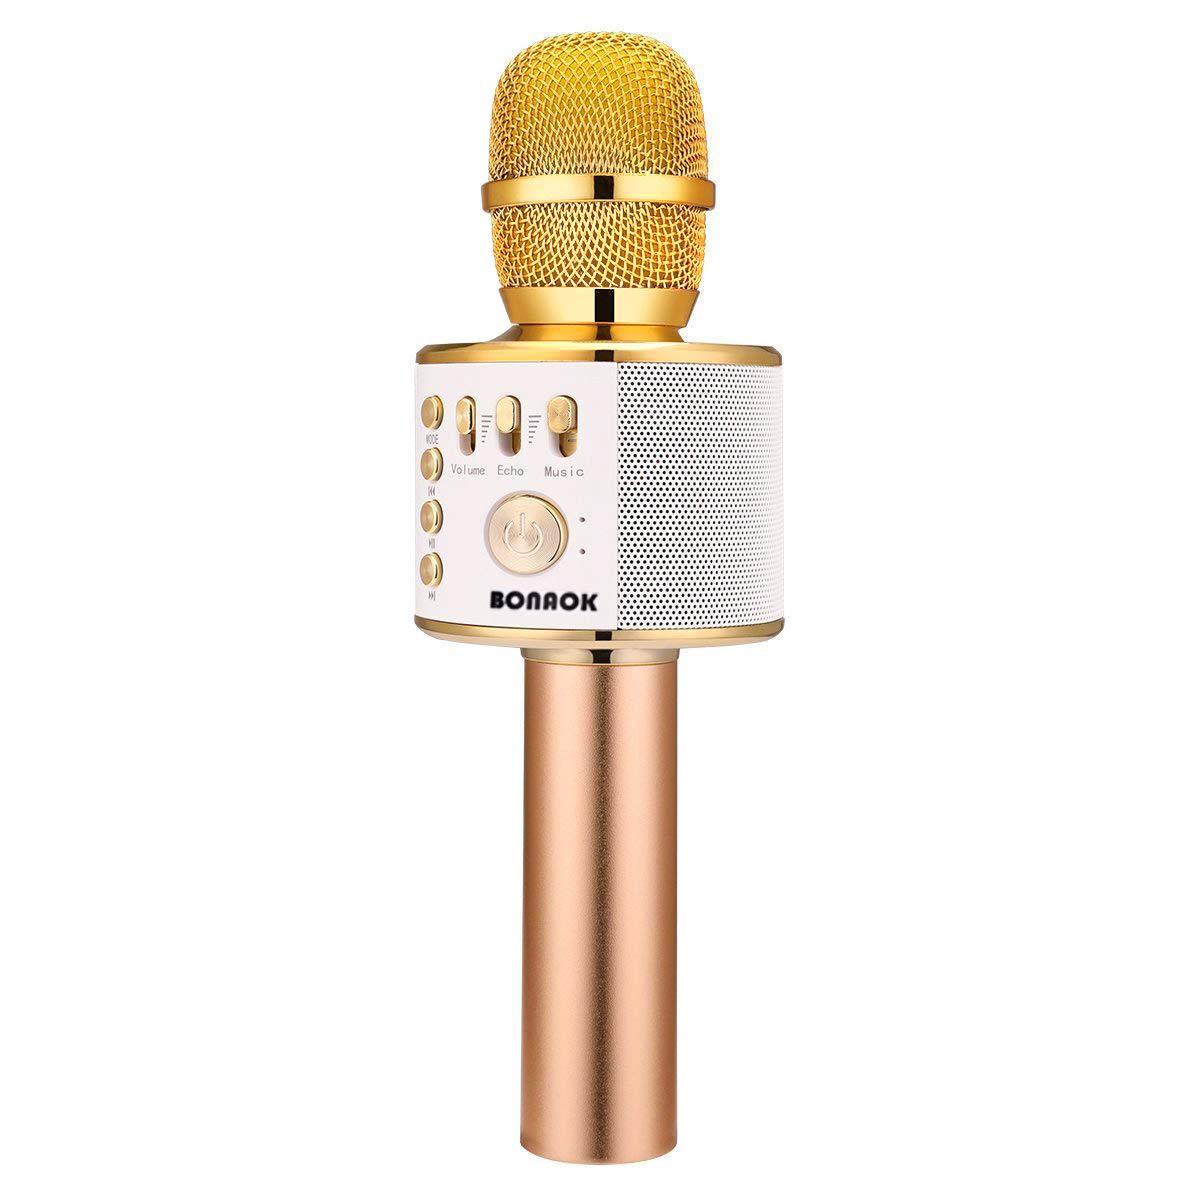 Playos® - Microphone Karaoké - Argent - Sans Fil - Bluetooth